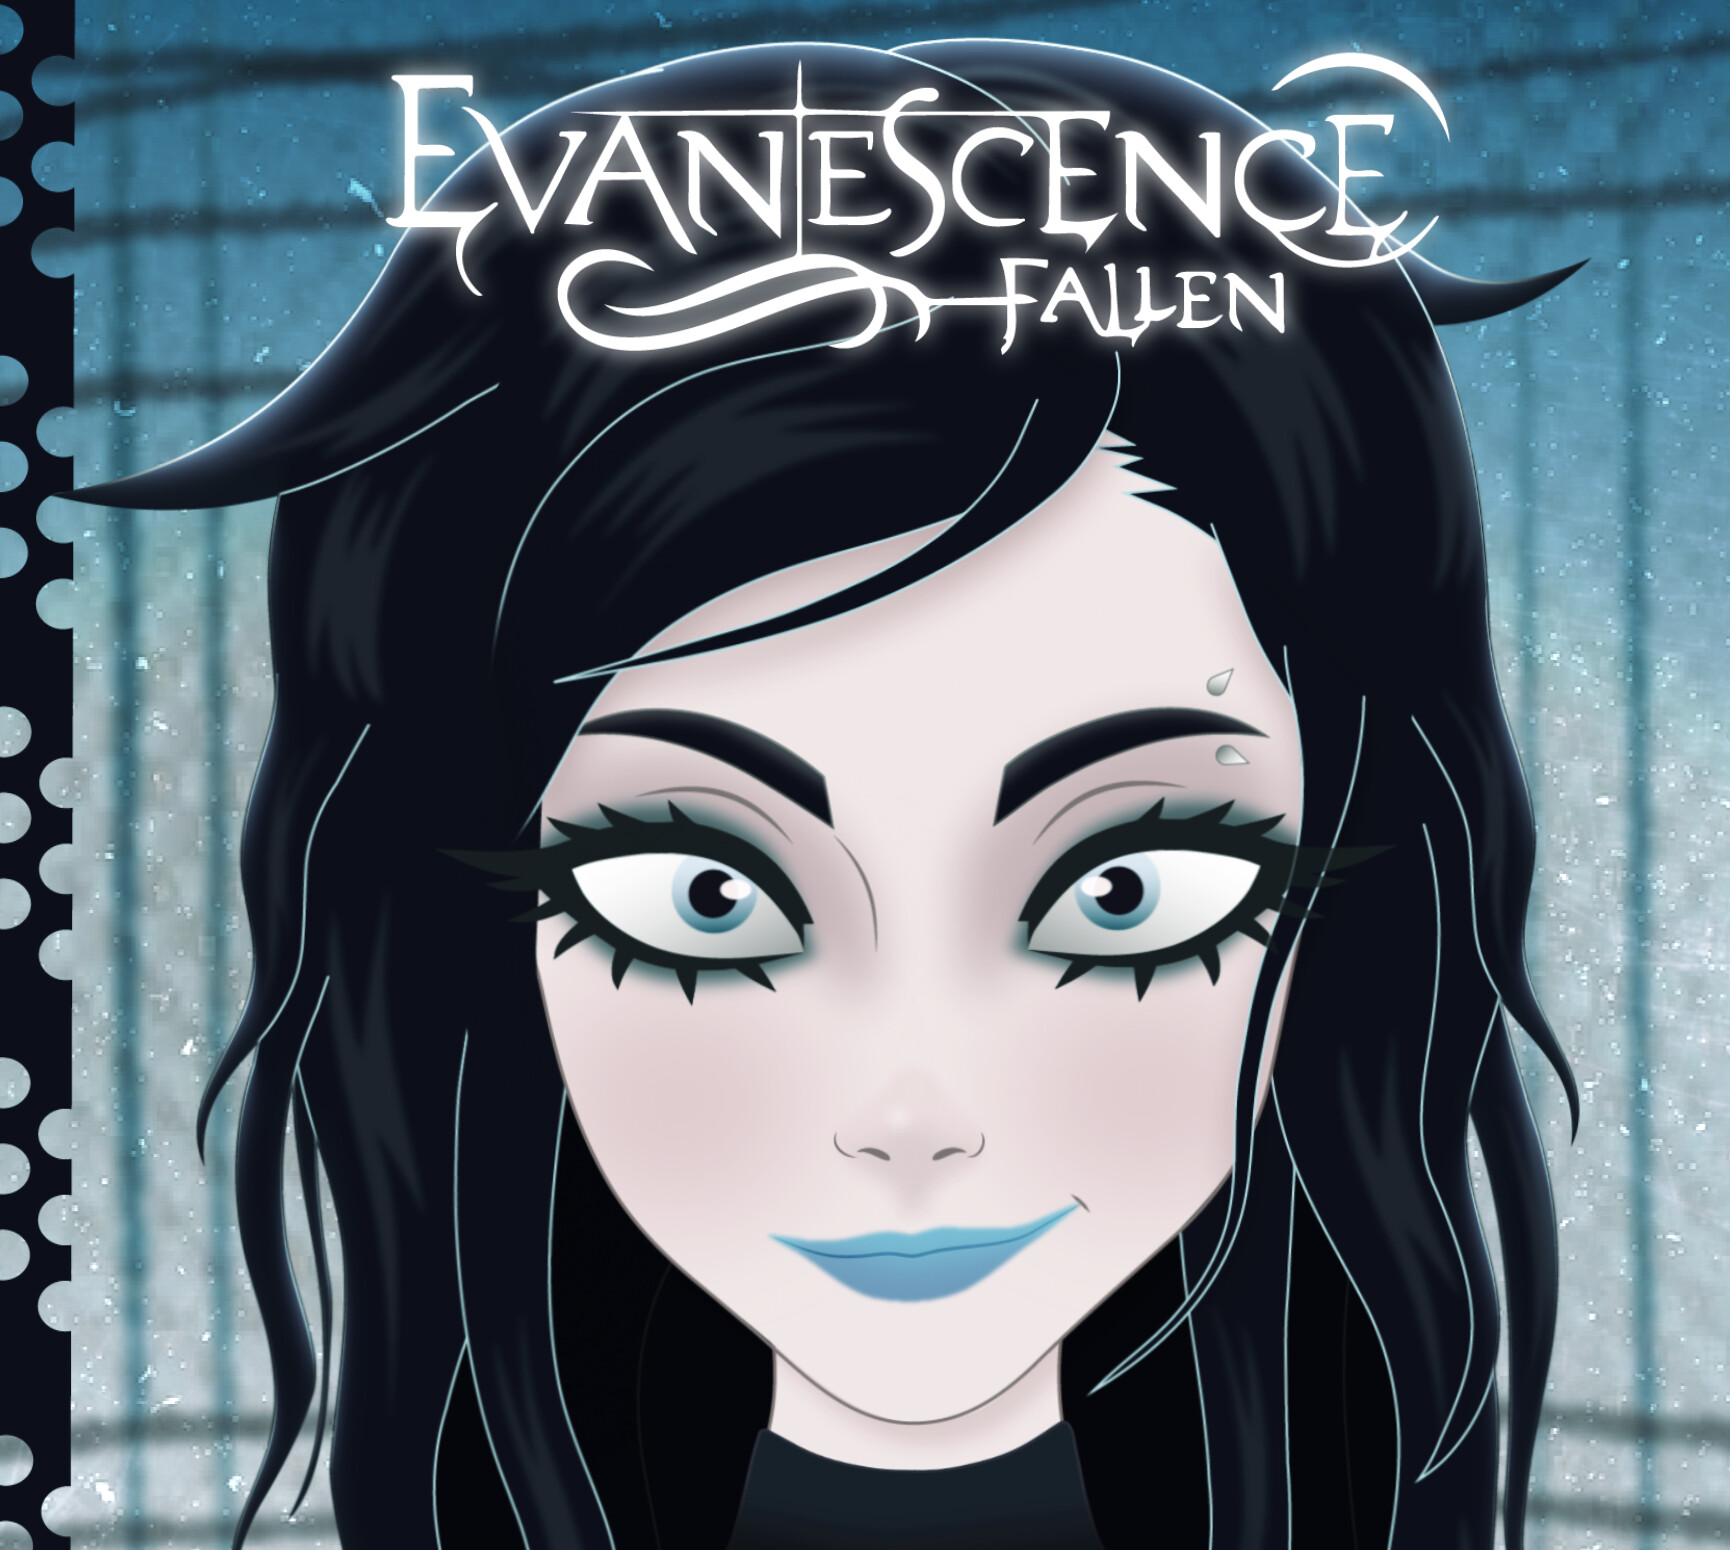 ArtStation - Evanescence